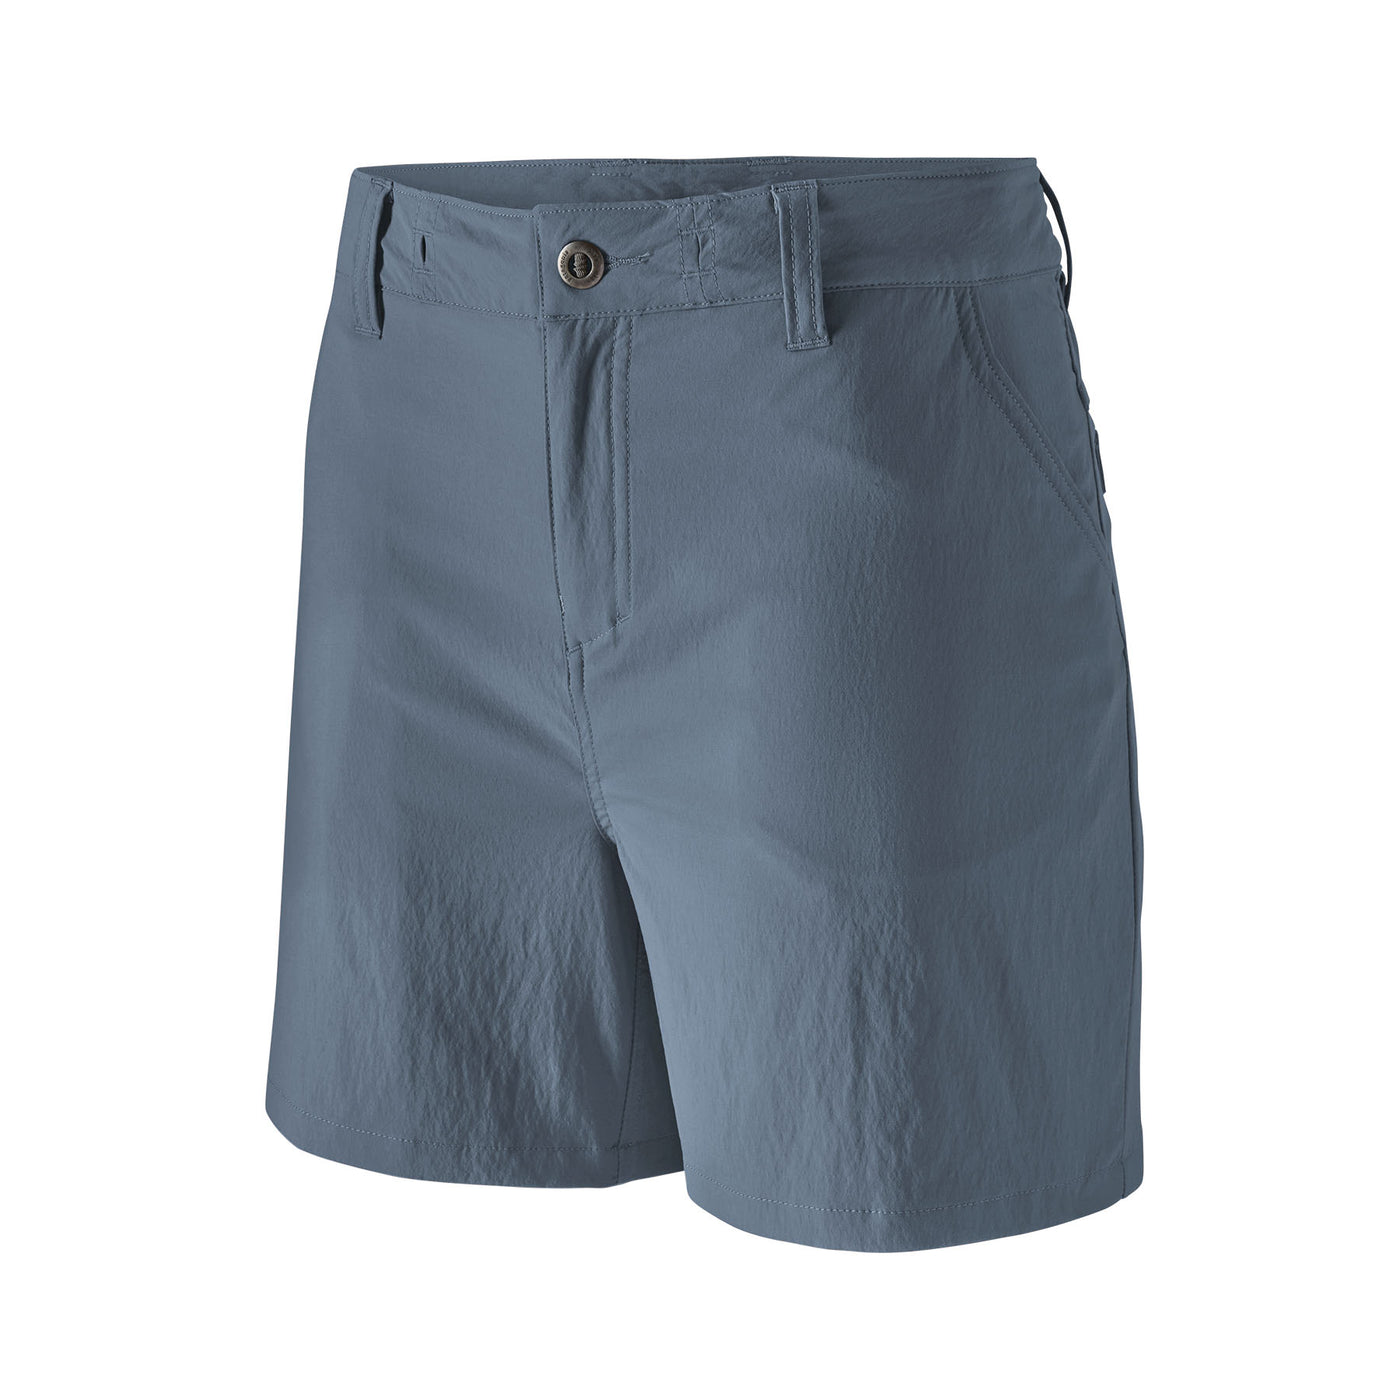 PATAGONIA Women's Quandary Shorts - 5in Utility Blue UTB